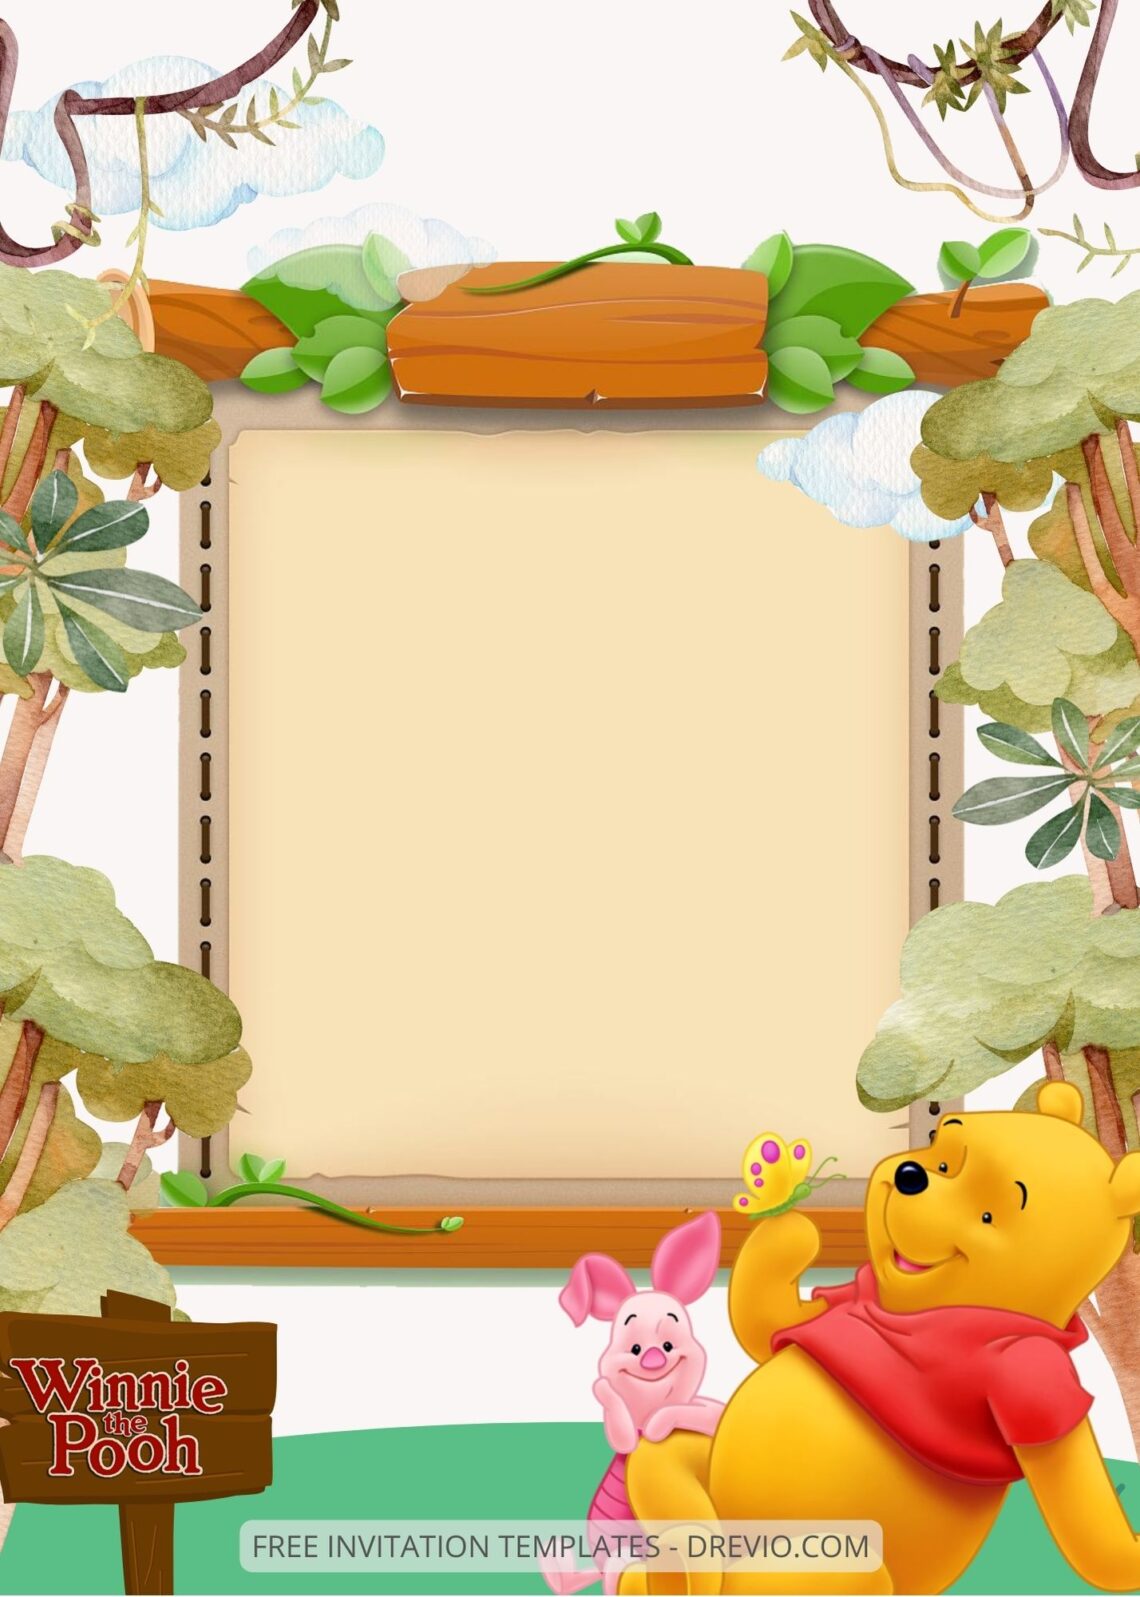 FREE EDITABLE - 9+ Winnie The Pooh Canva Birthday Invitation Templates Five